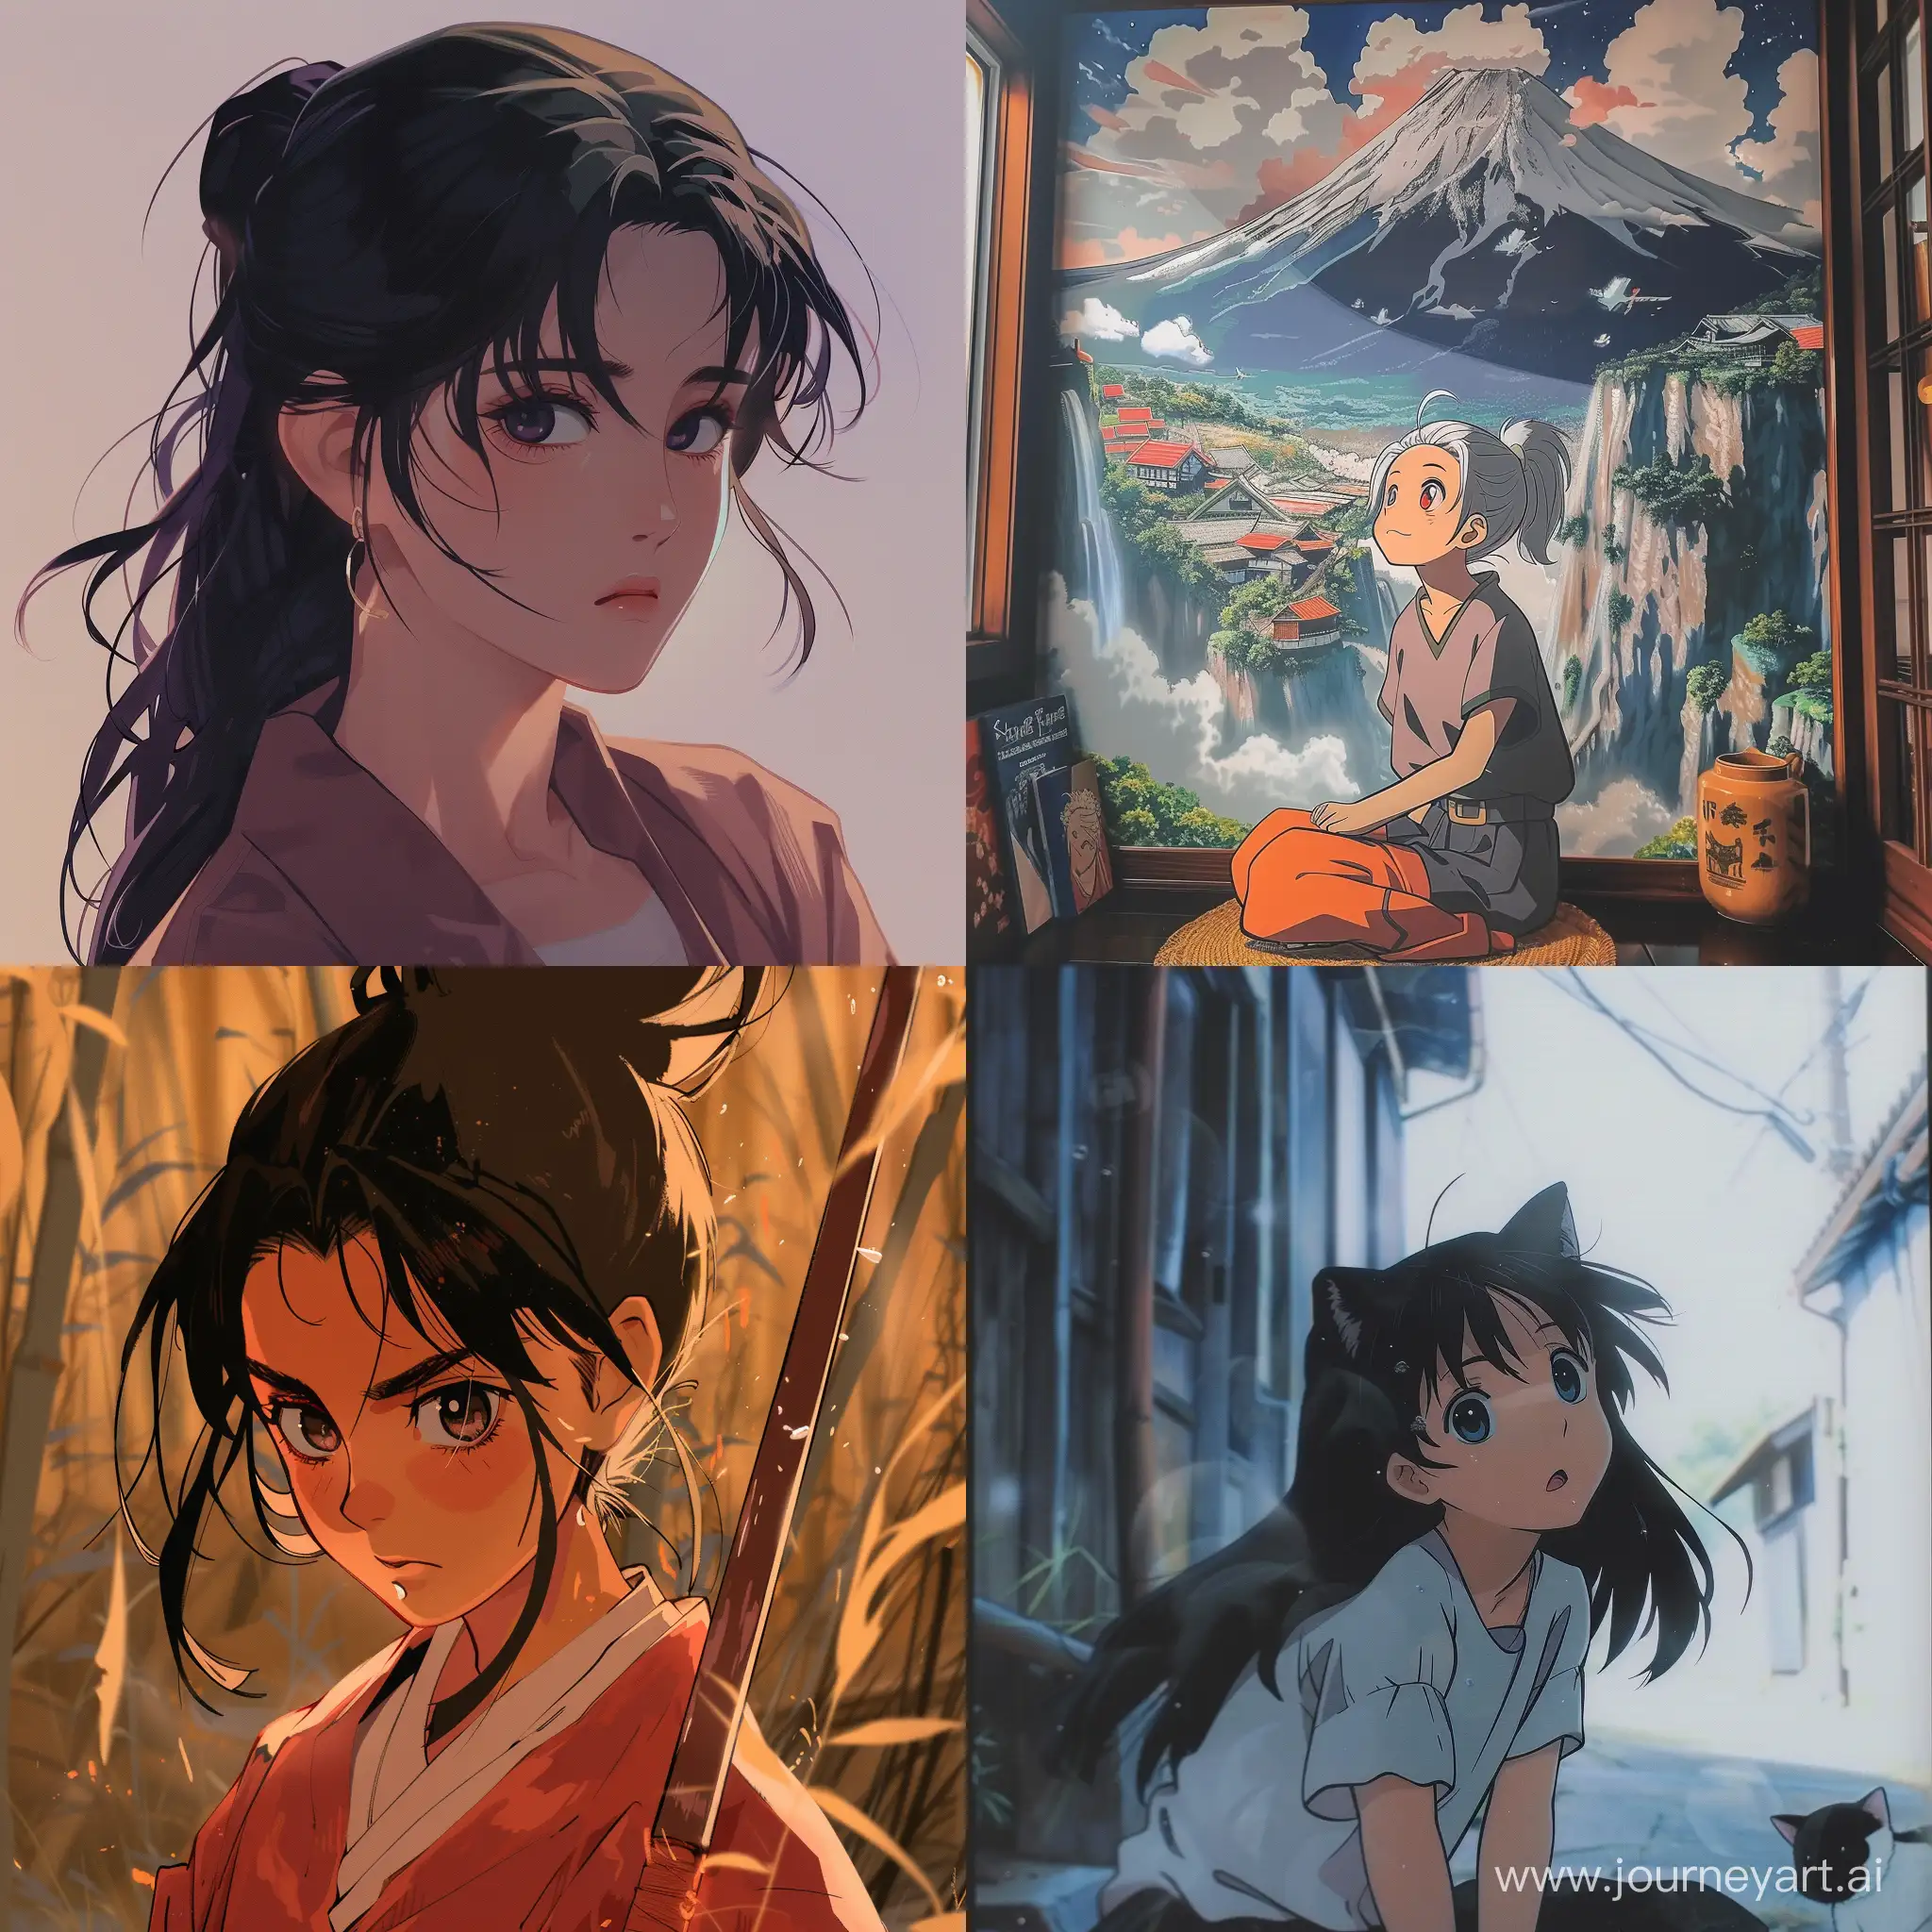 Yoruichi-in-Enchanting-GhibliInspired-Anime-Style